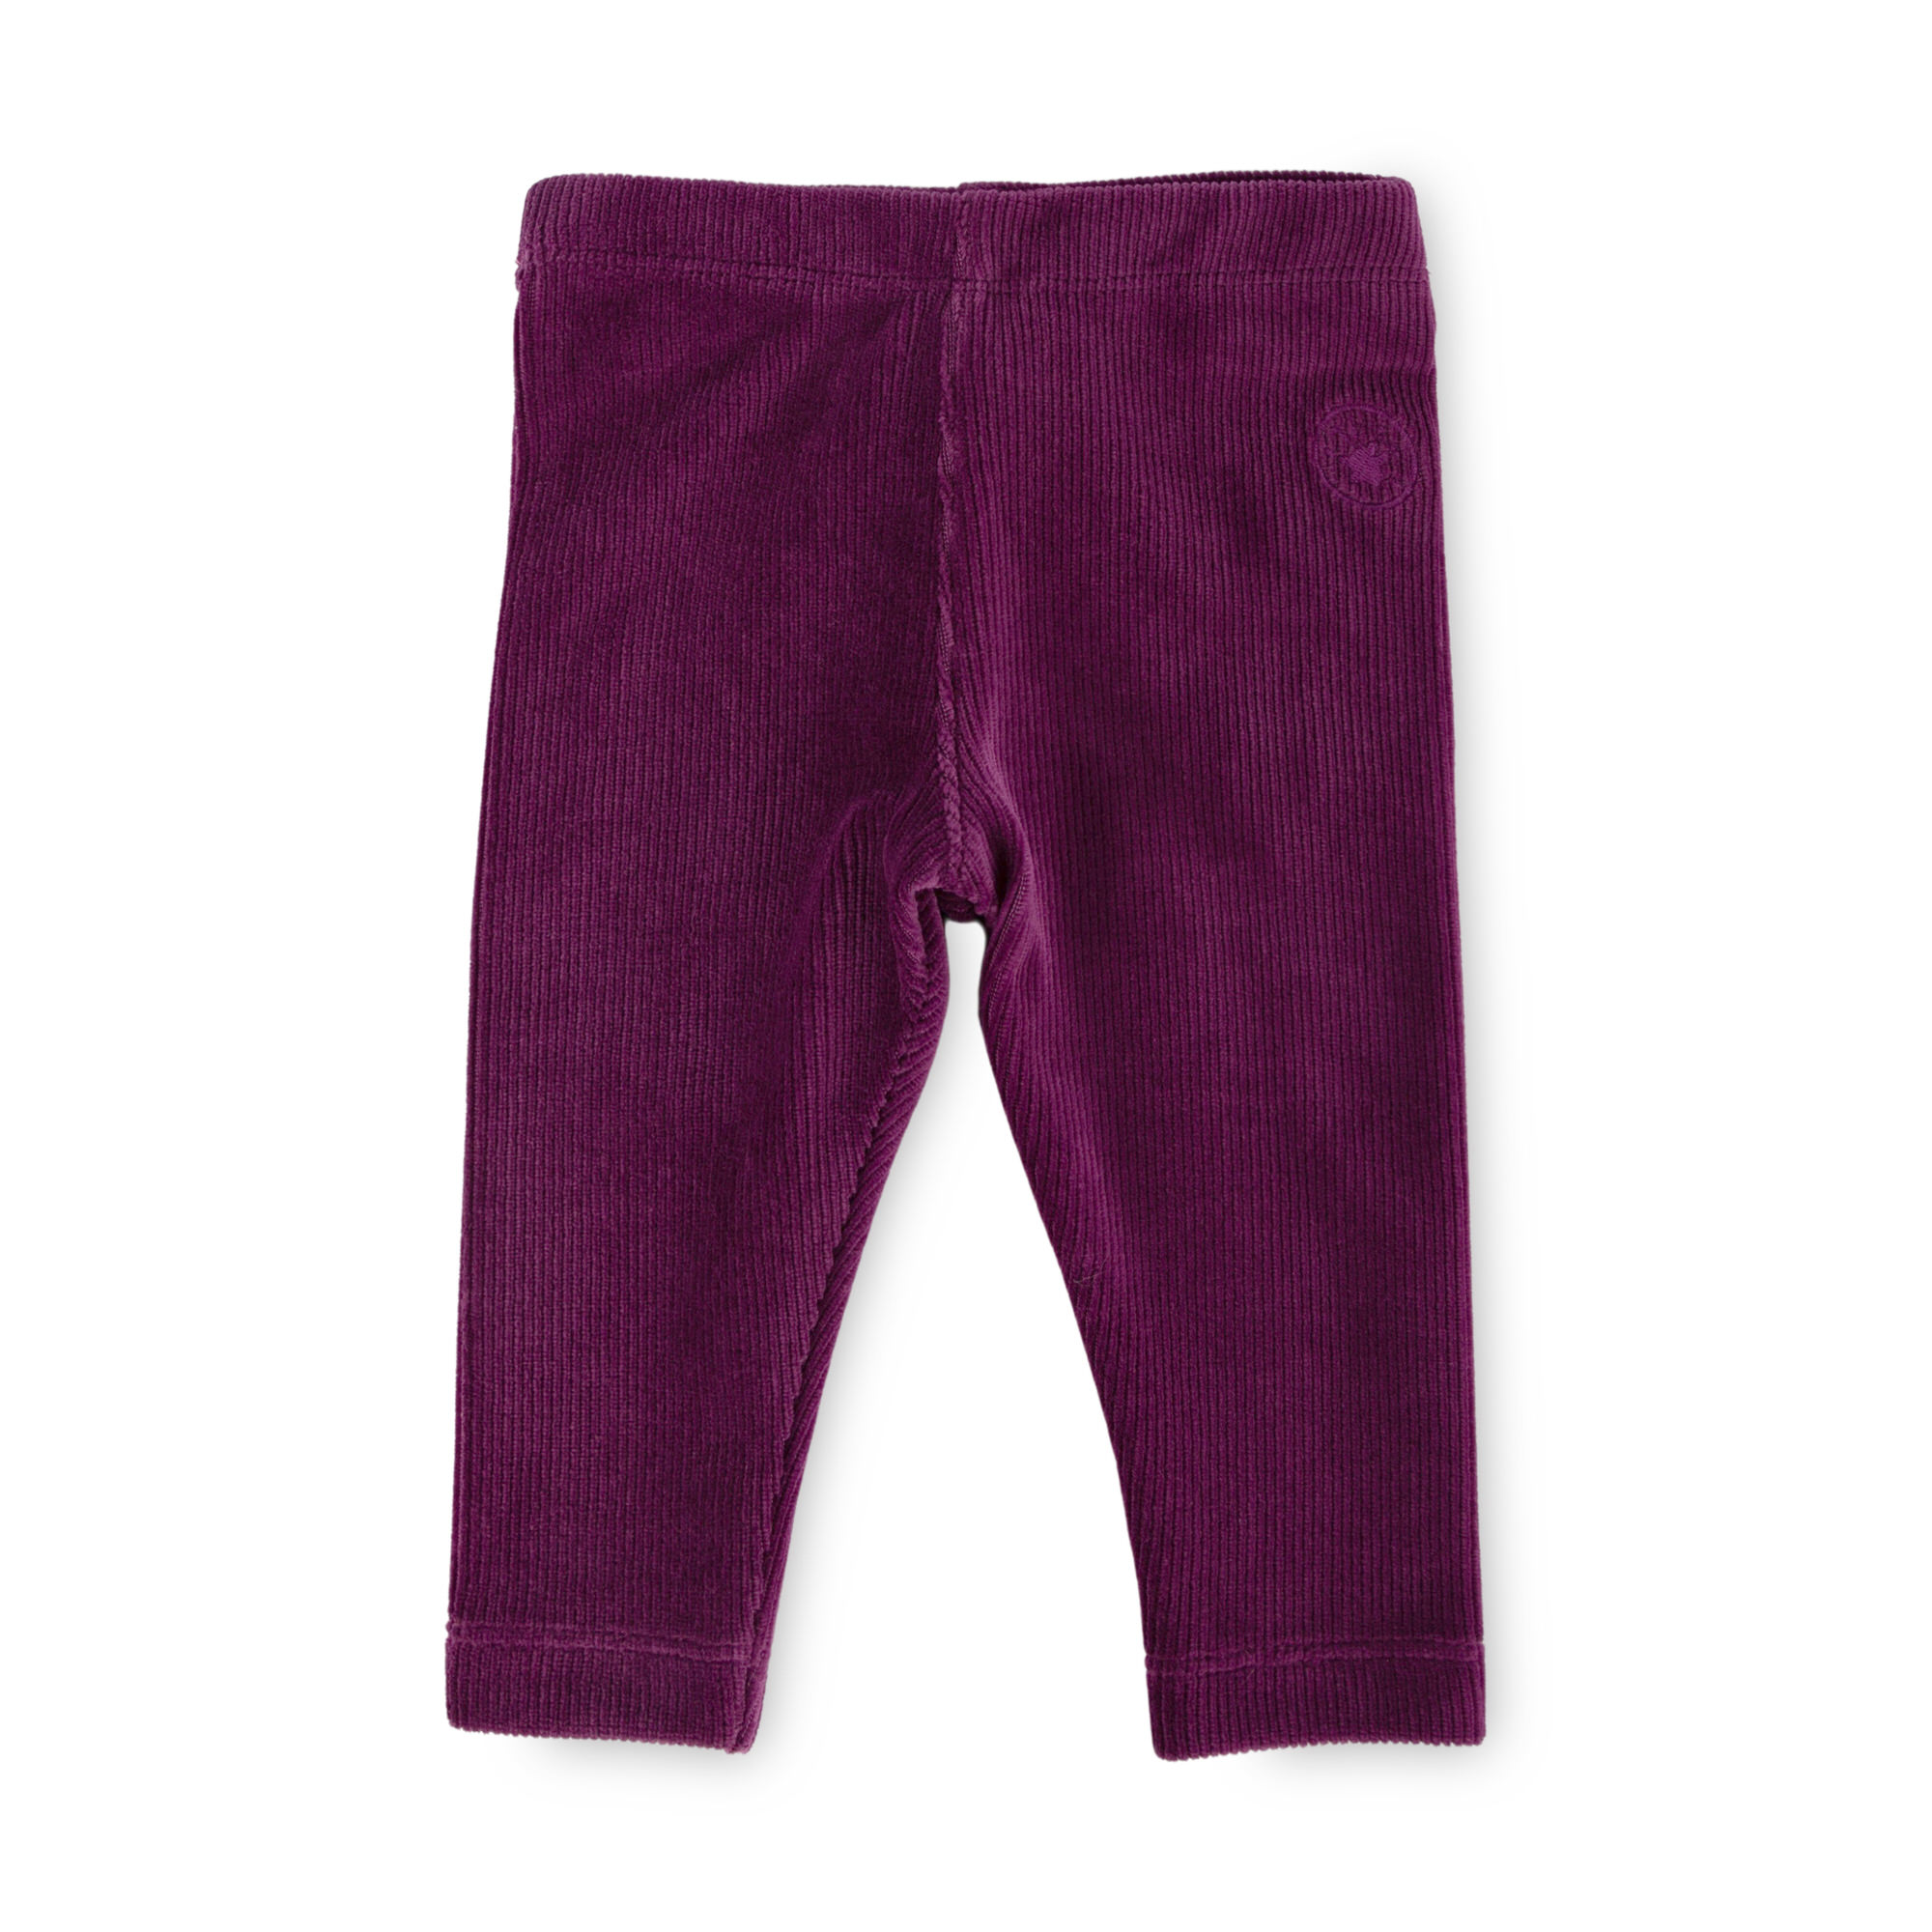 Stretchy soft baby corduroy leggings, purple